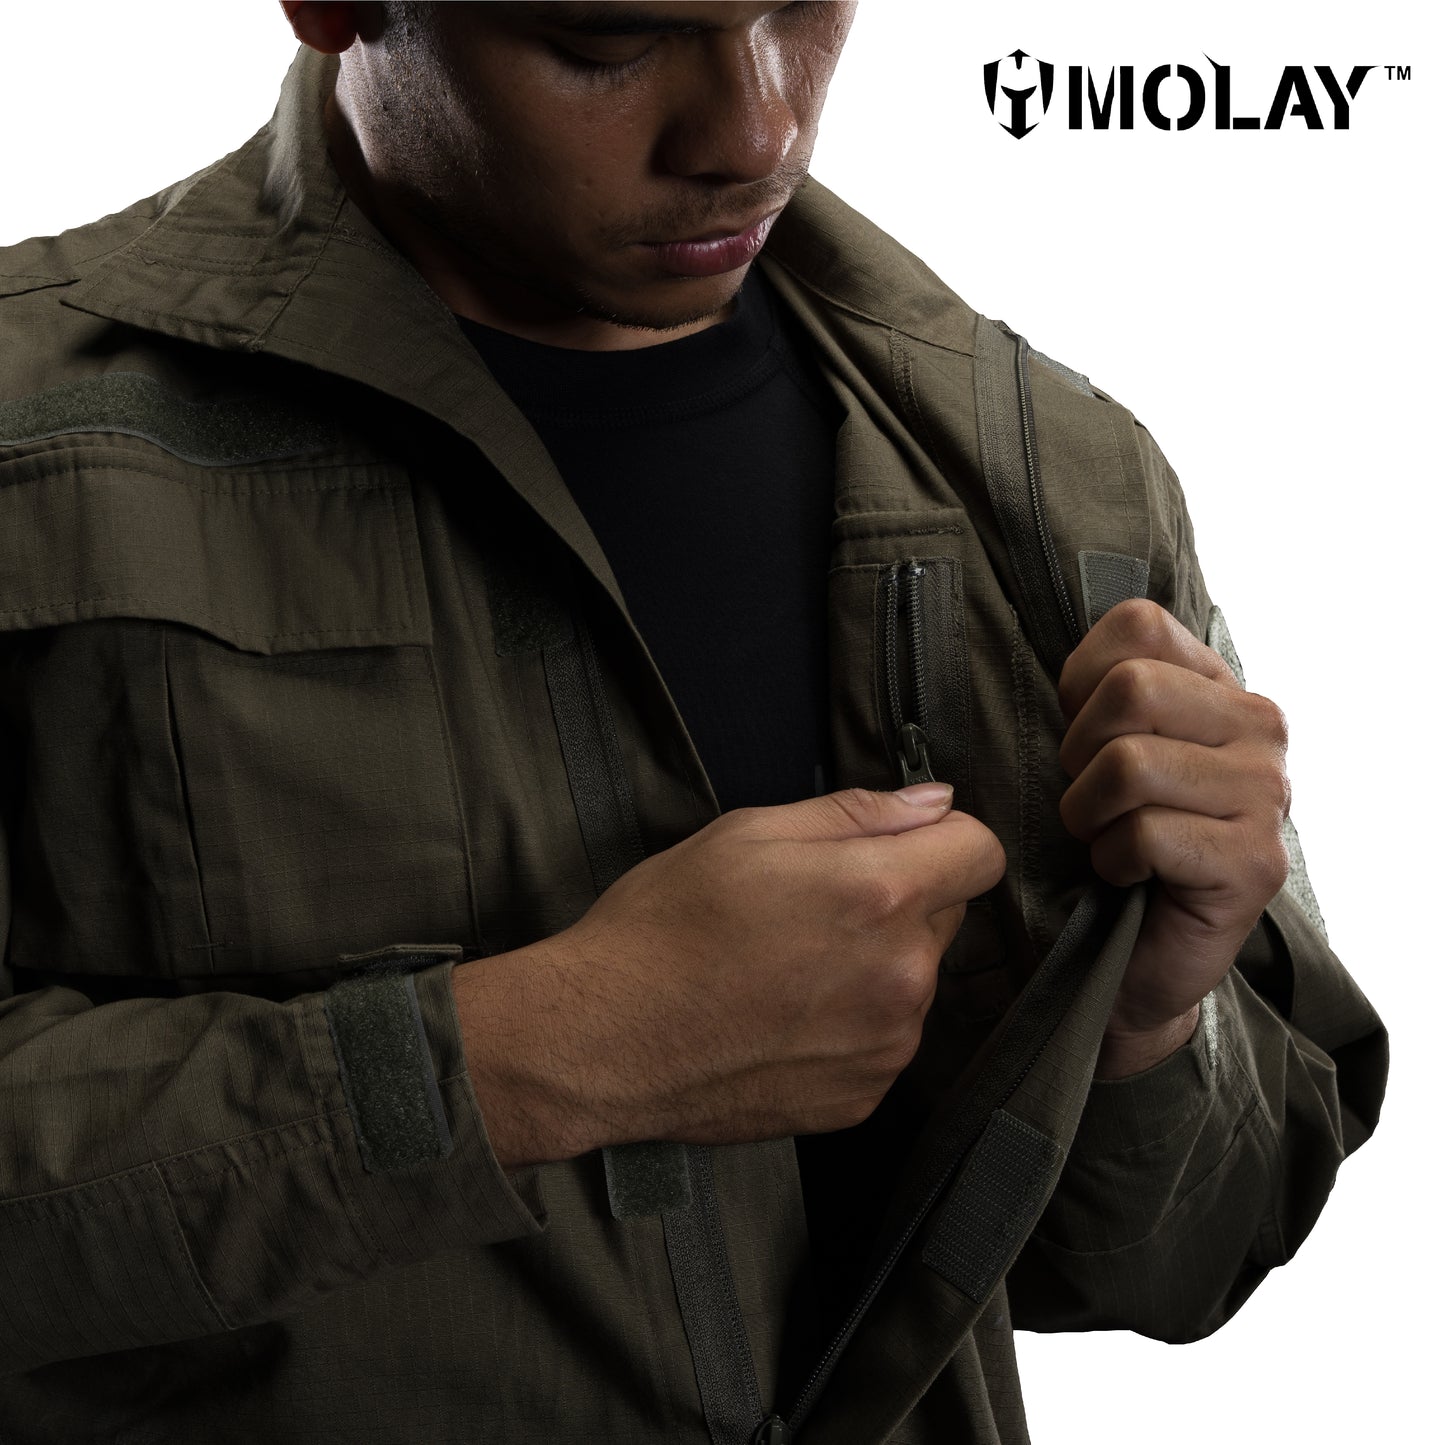 Molay® Peacekeeping Uniform Blouse